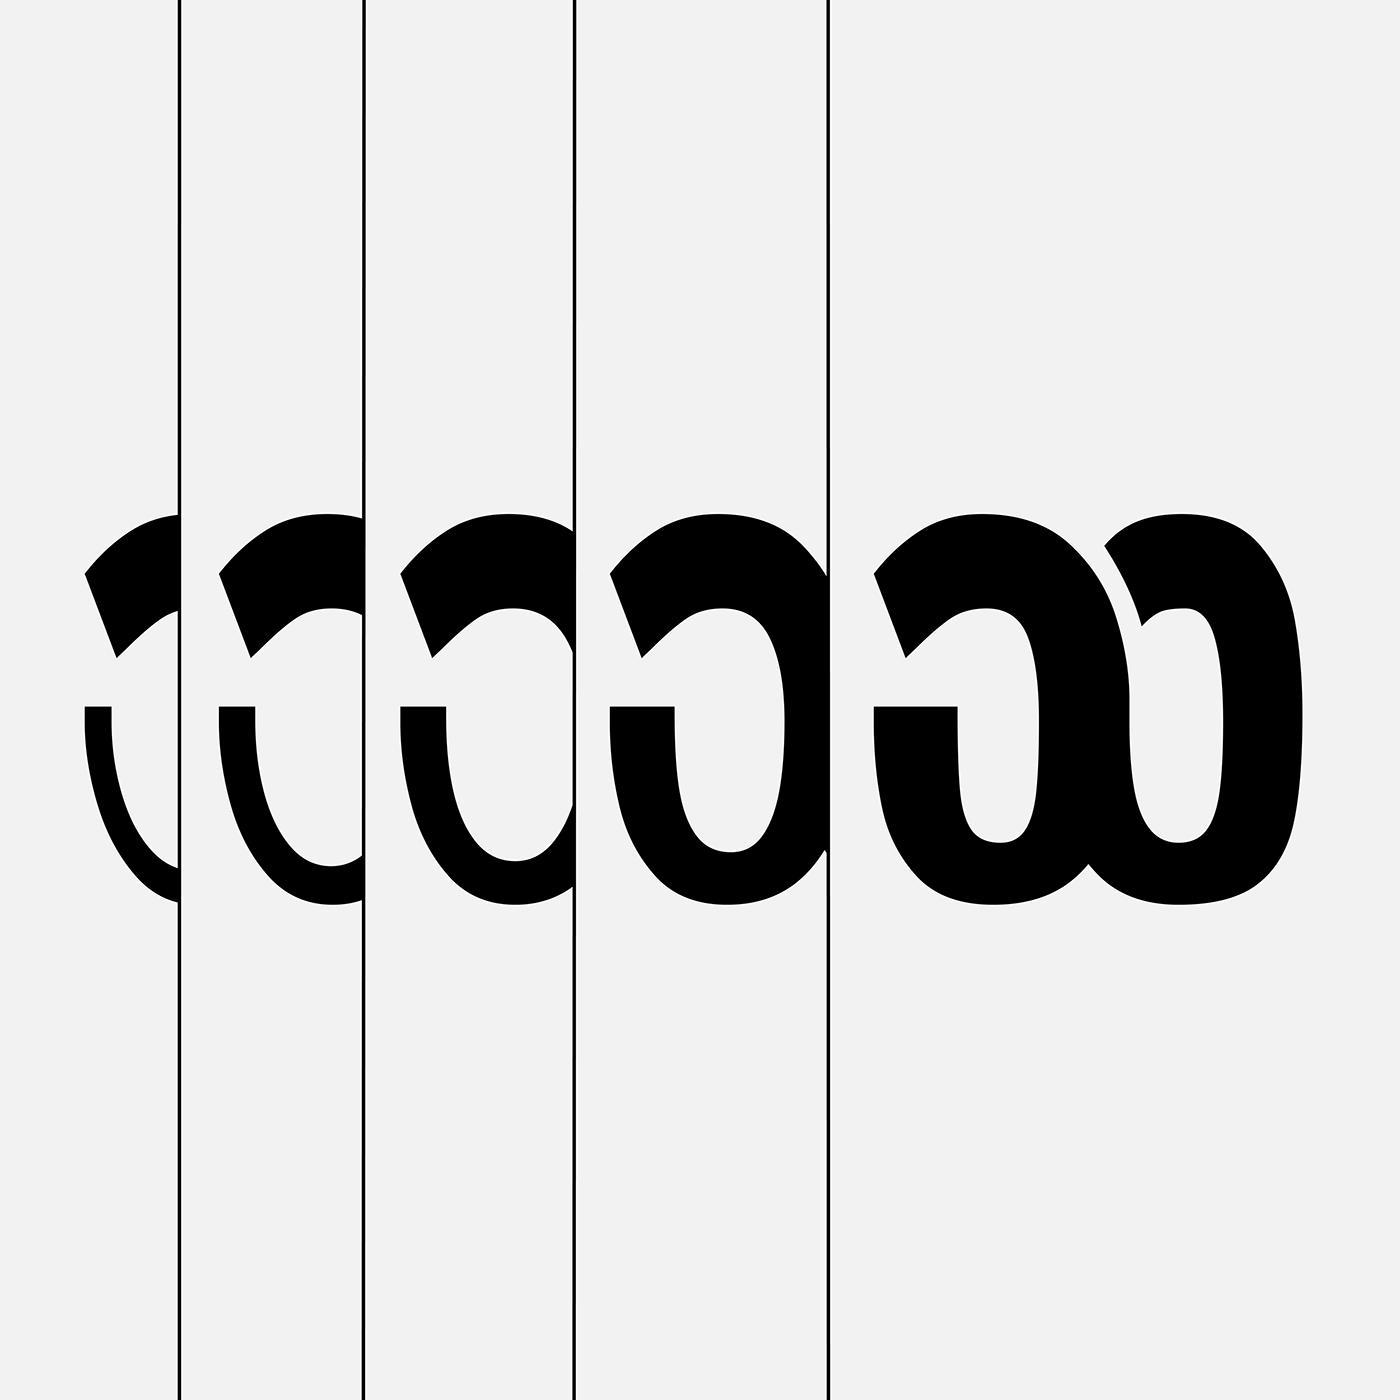 wabla Typeface font variablefont light bold type typedesign ABC typography  